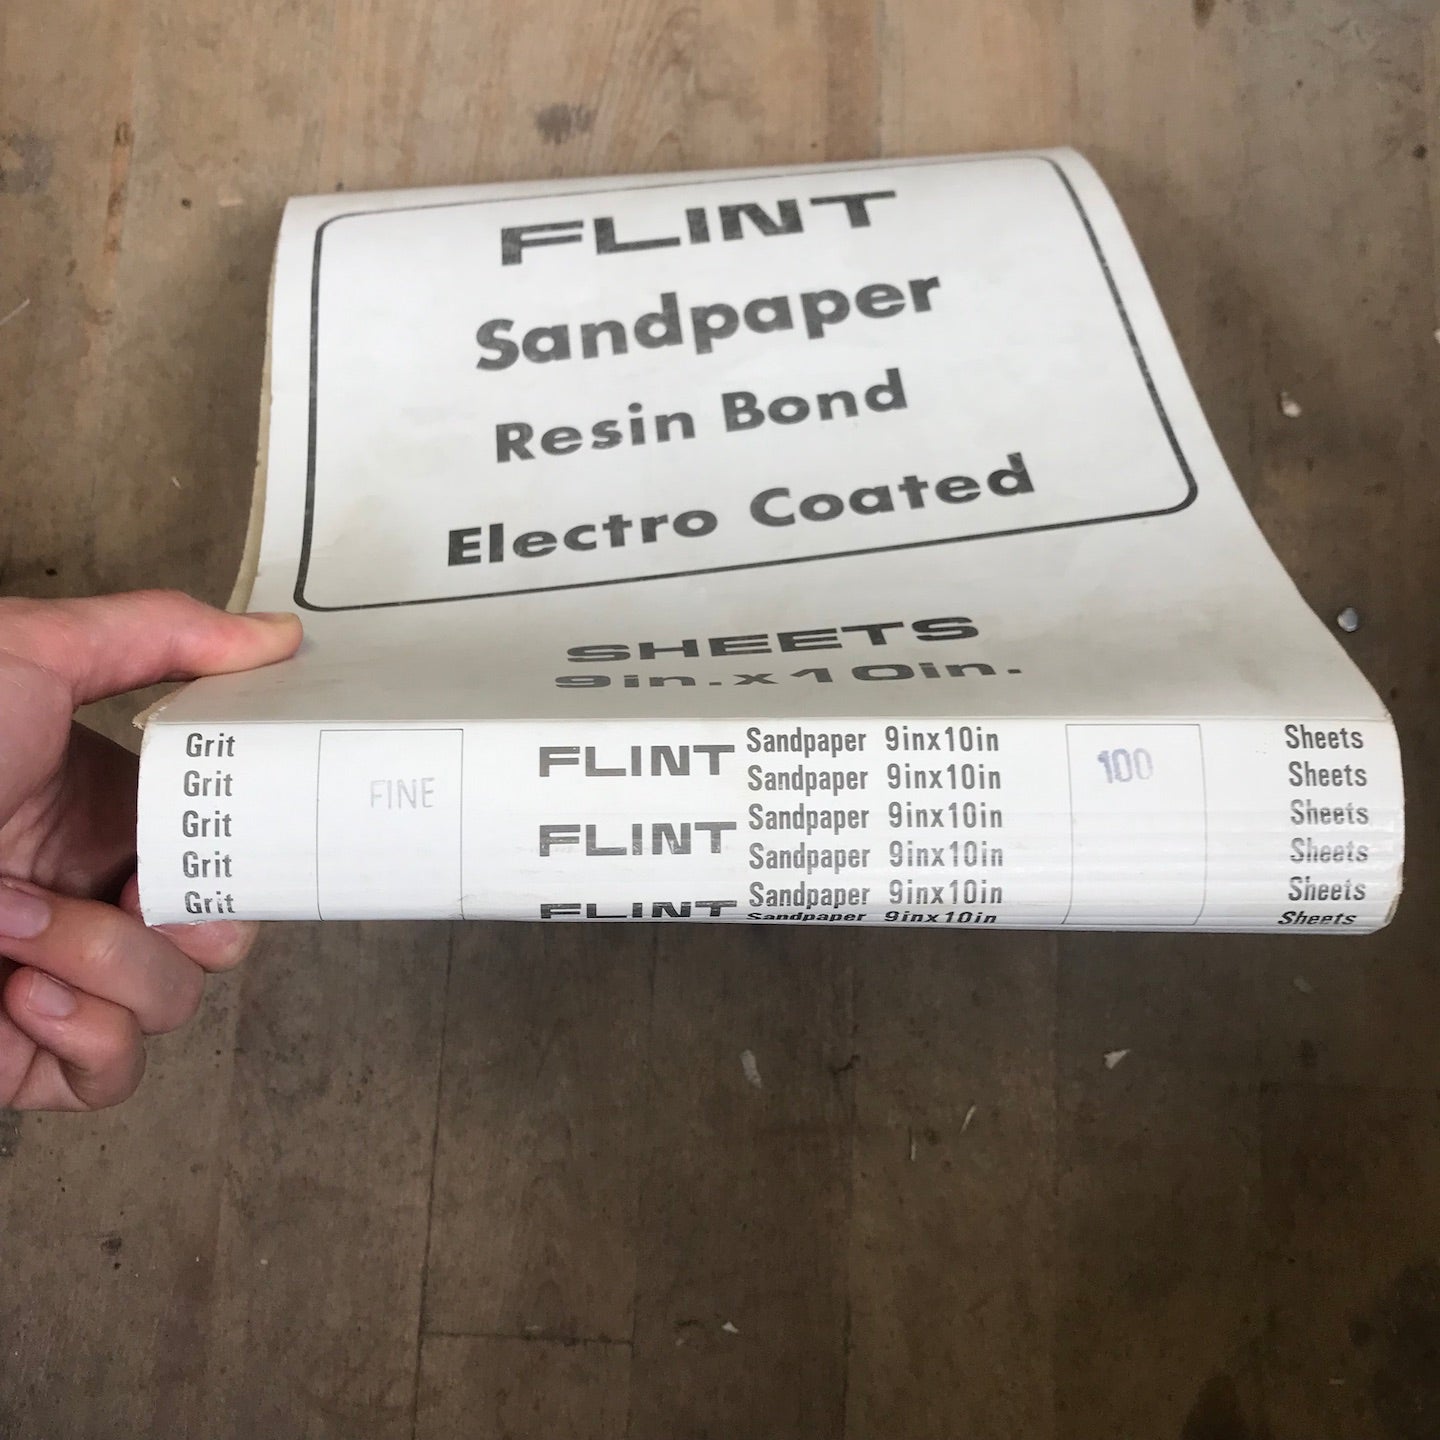 Flint Sandpaper Resin Bond Electro Coated 100 9" x 10" Sheets (electro-resin)